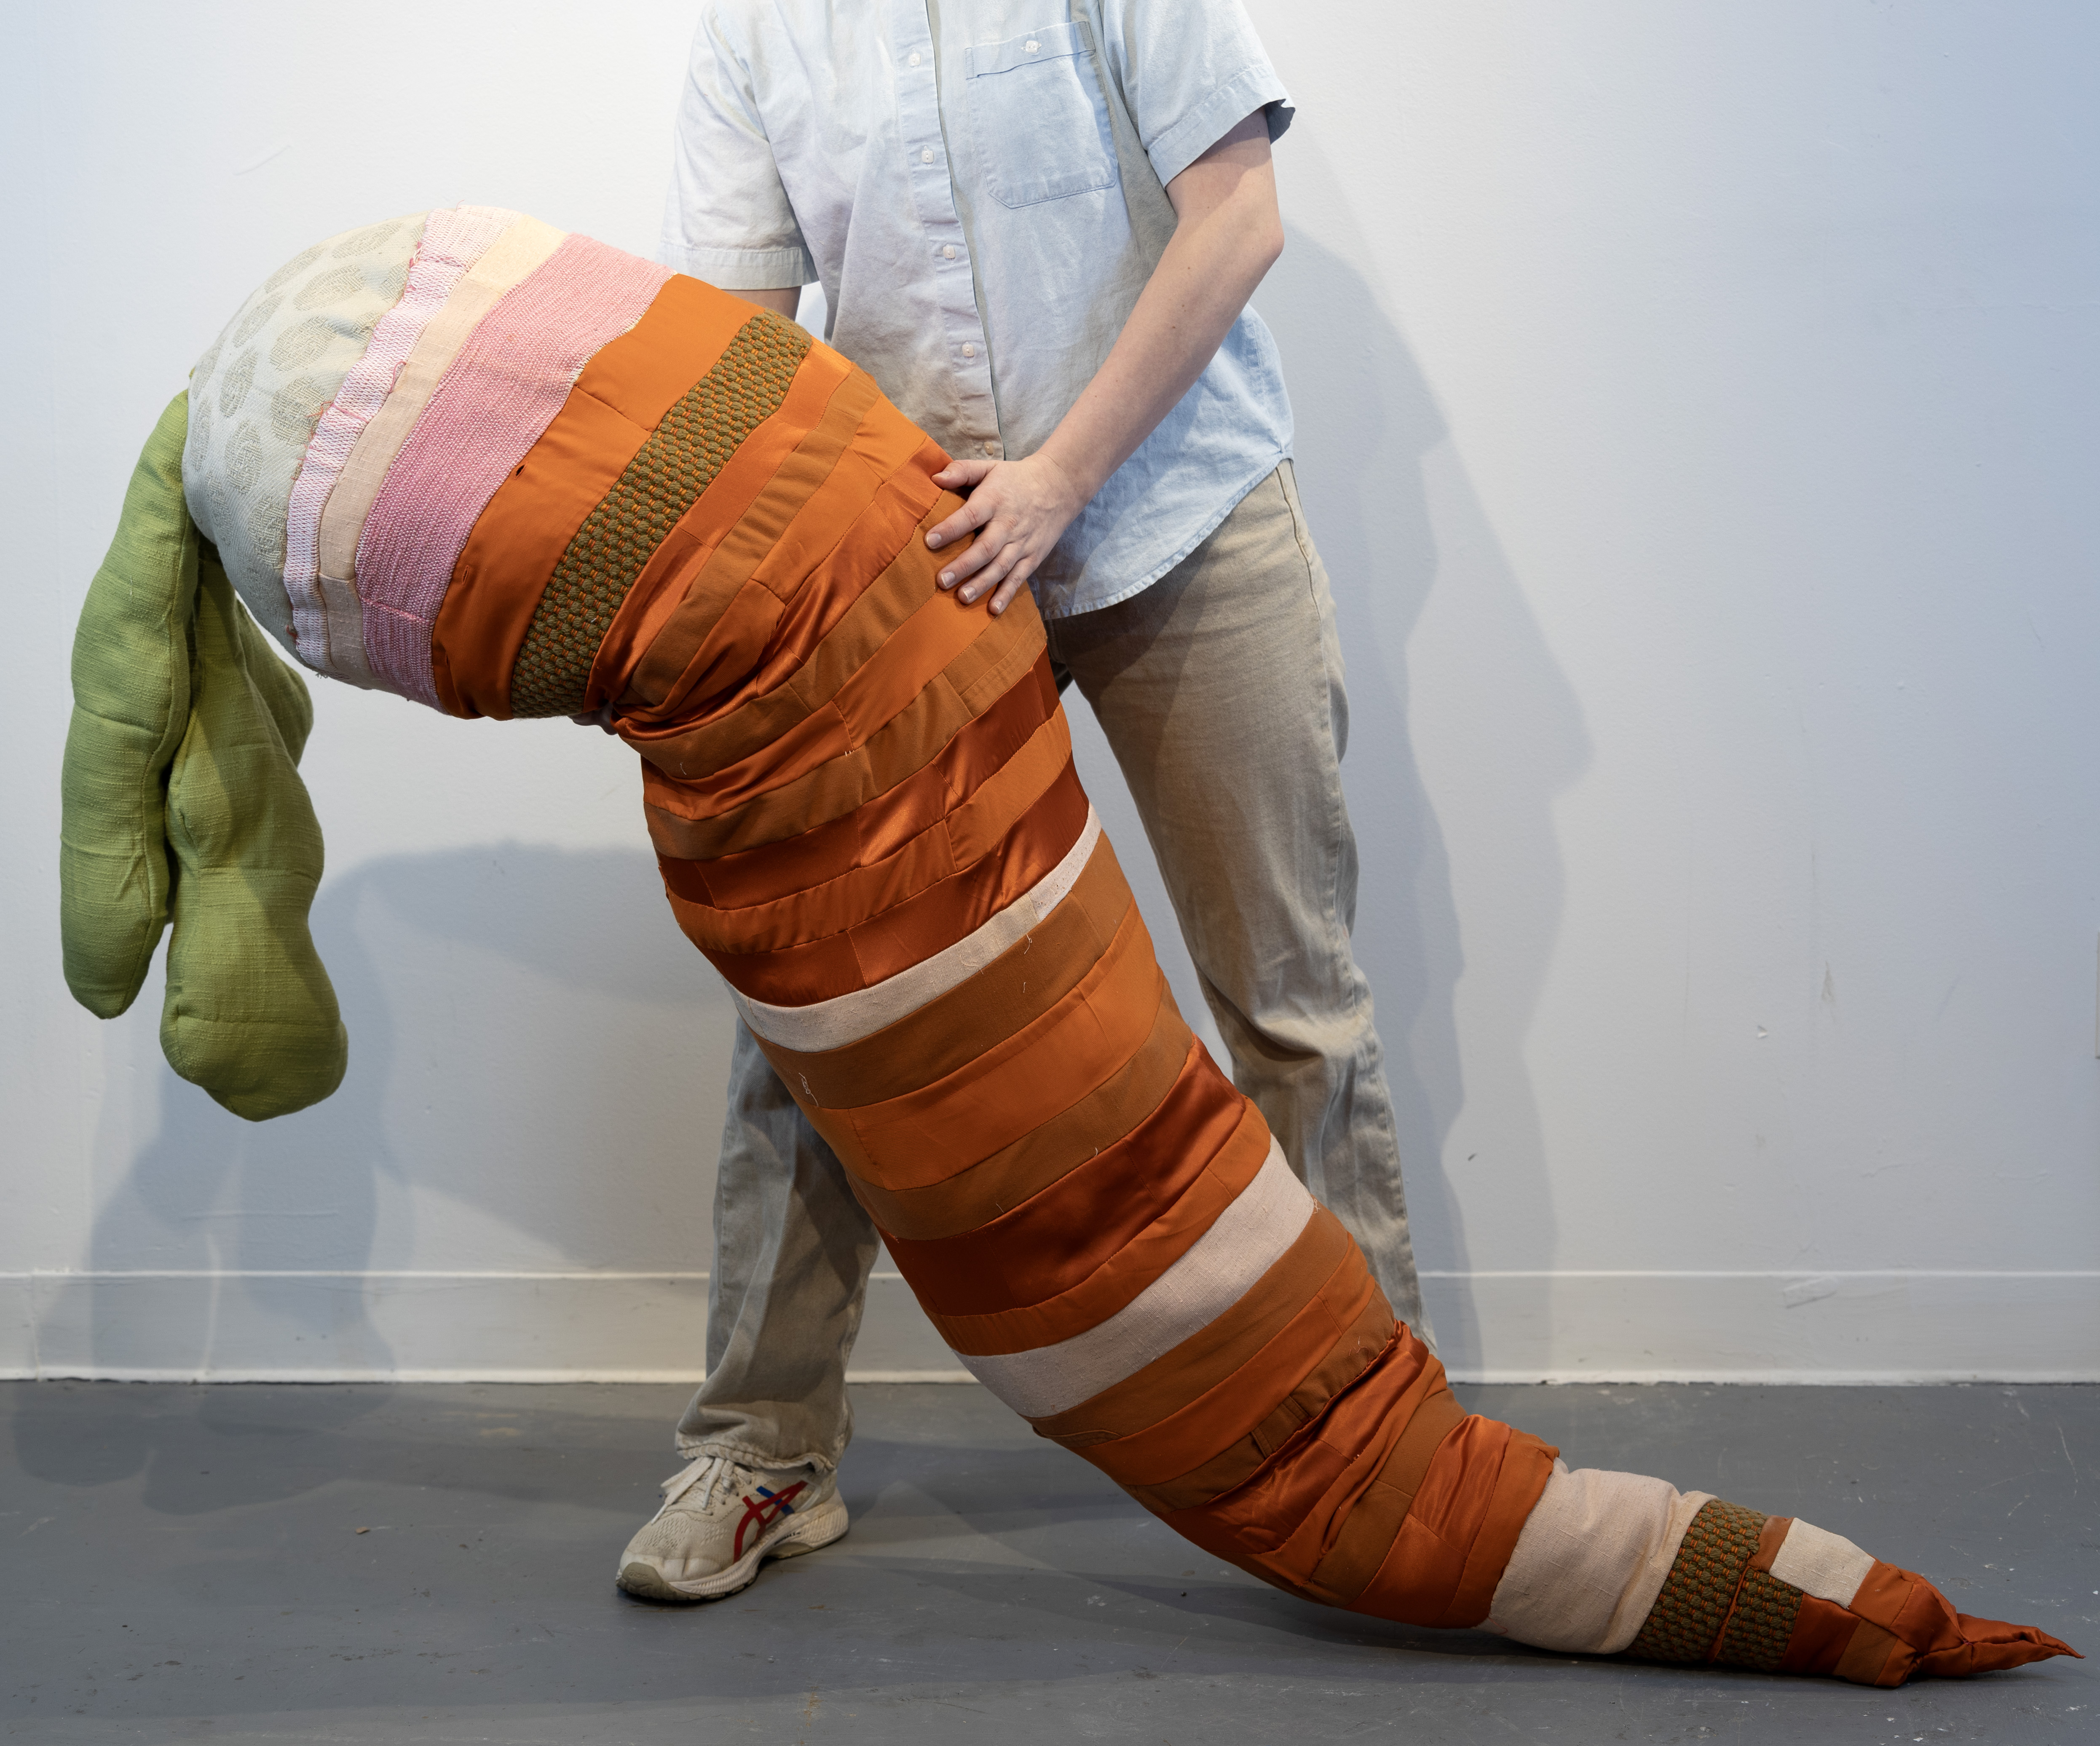 Fabric sculpture of a carrot